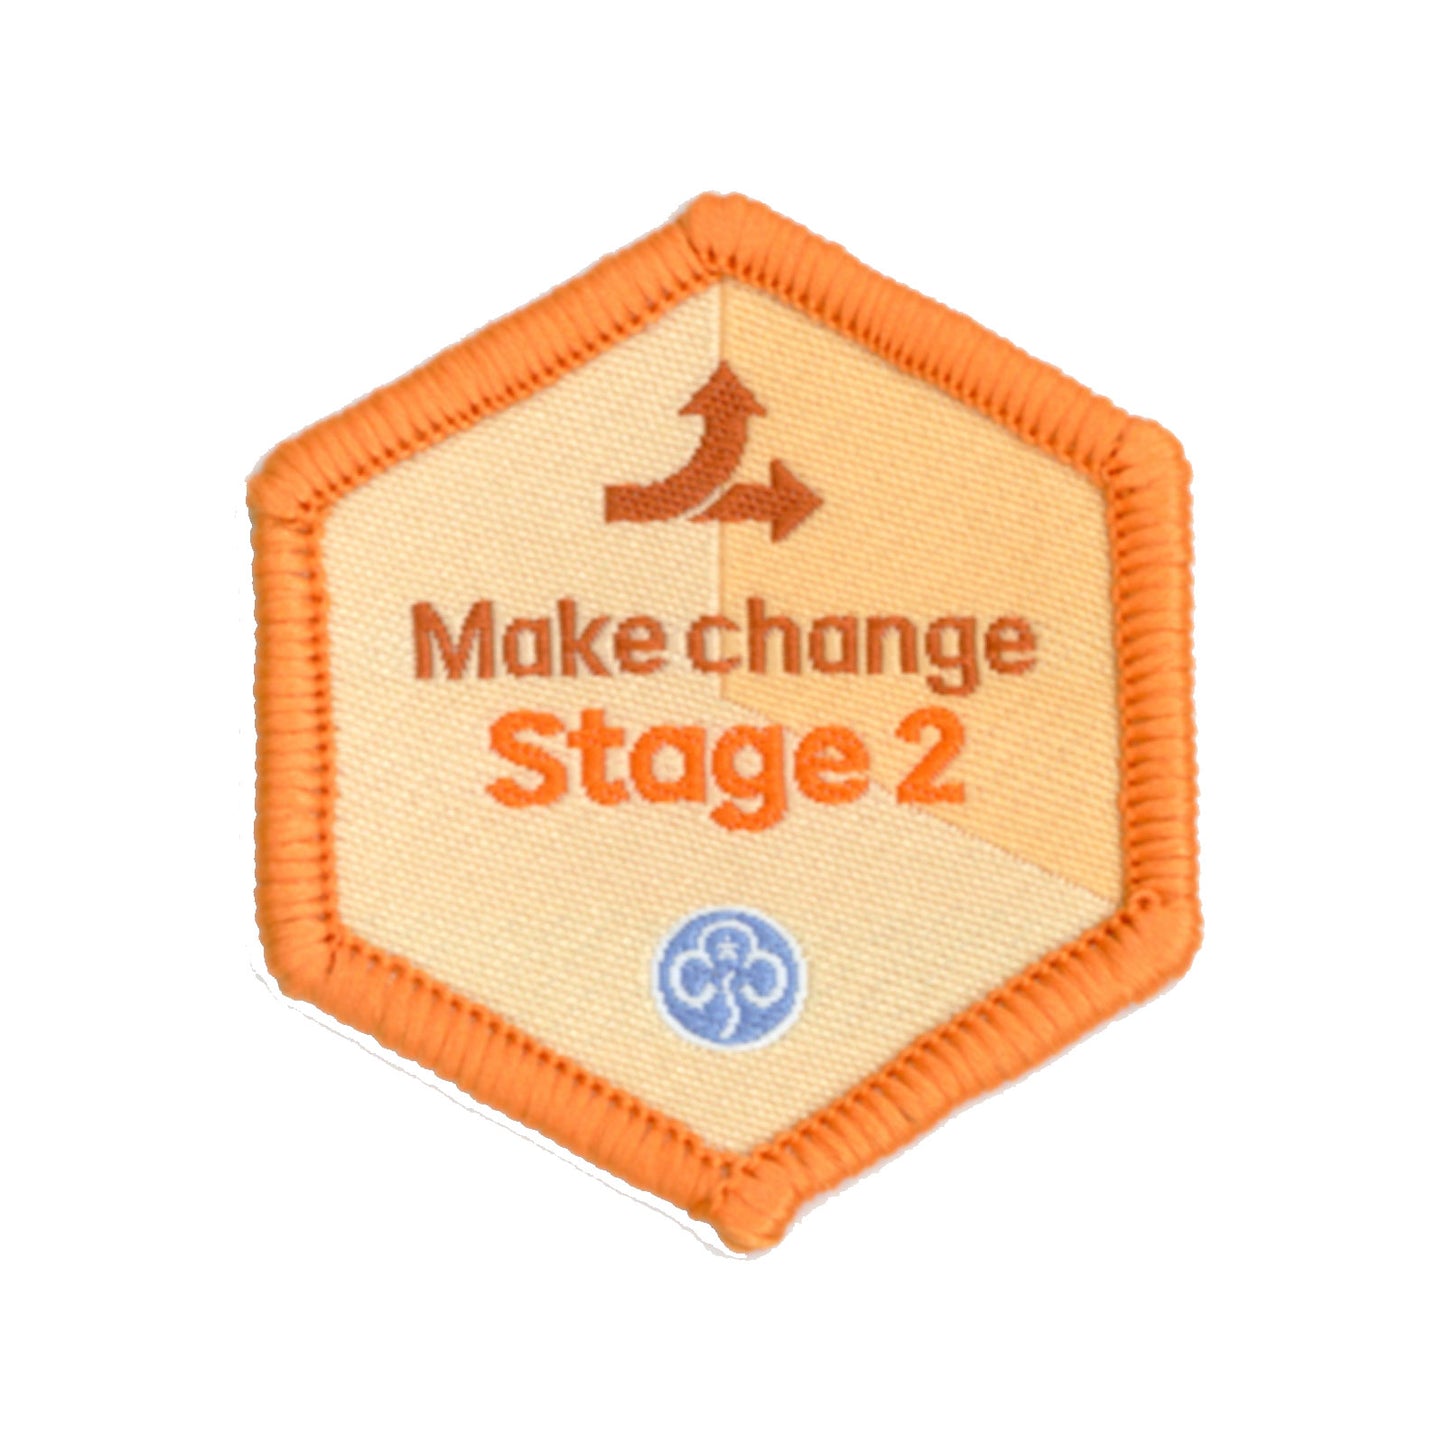 Skills Builder - Take Action - Make Change Stage 2 Woven Badge